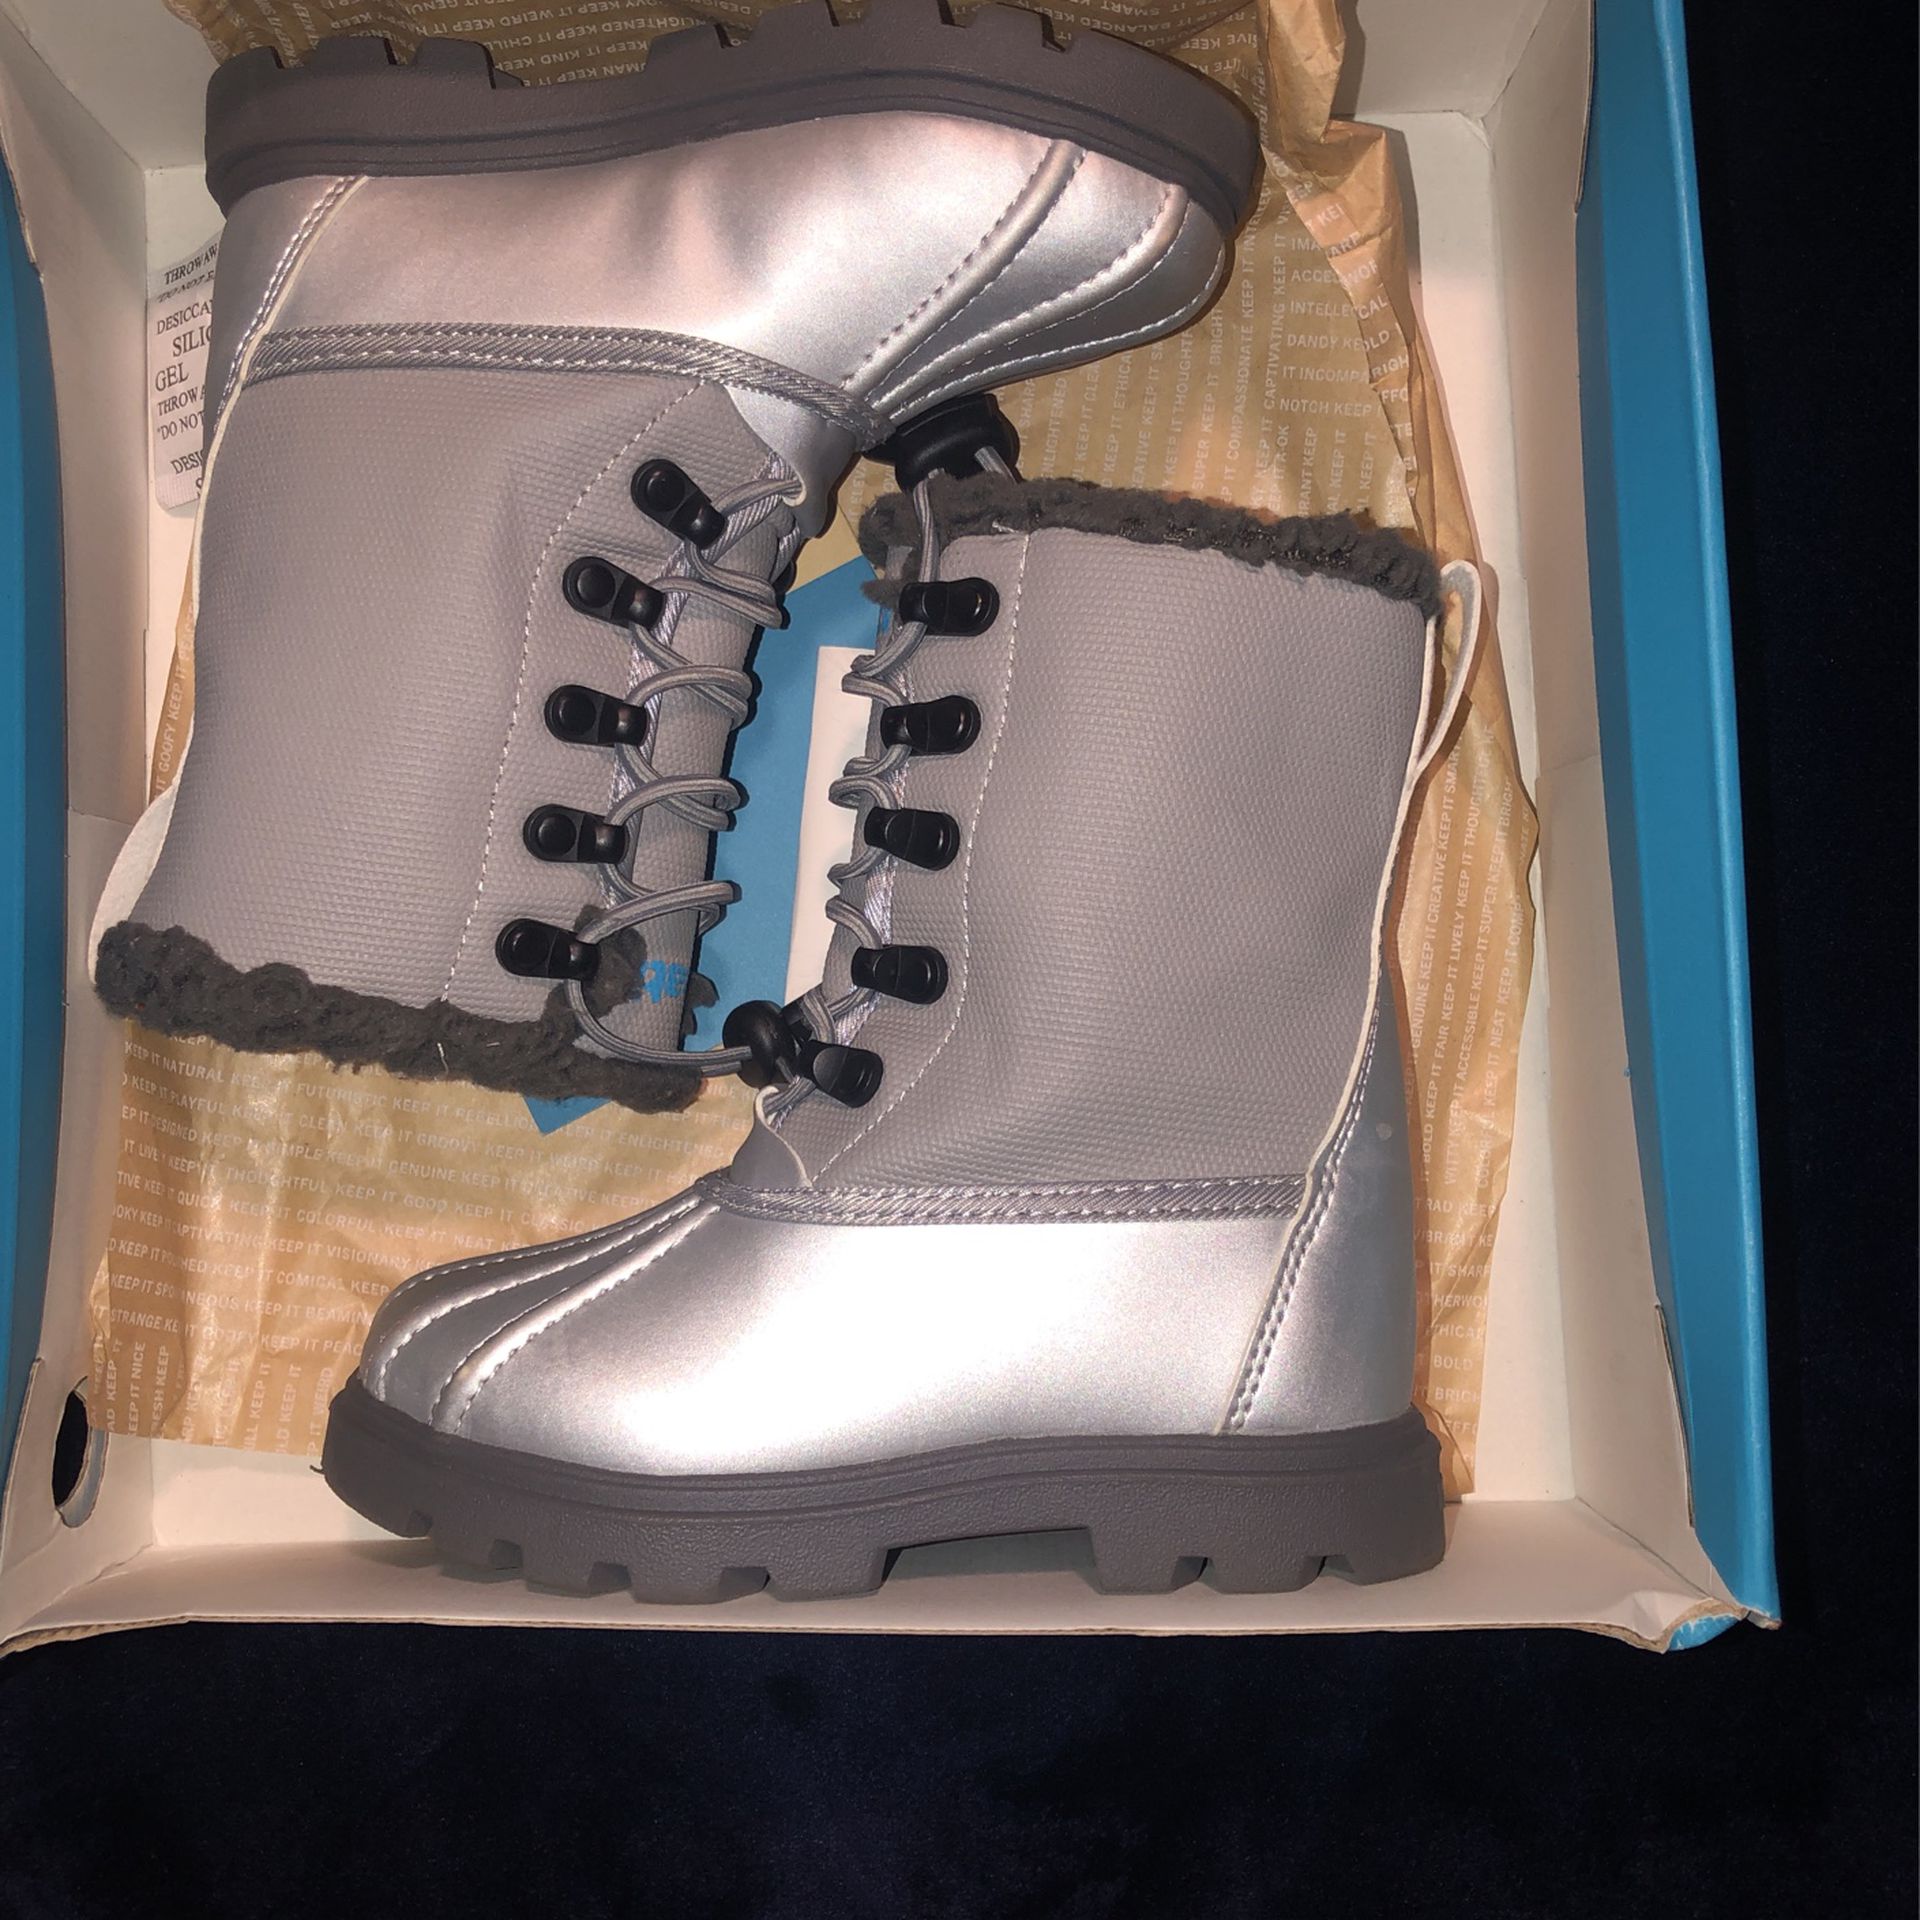 Unisex Snow Boots